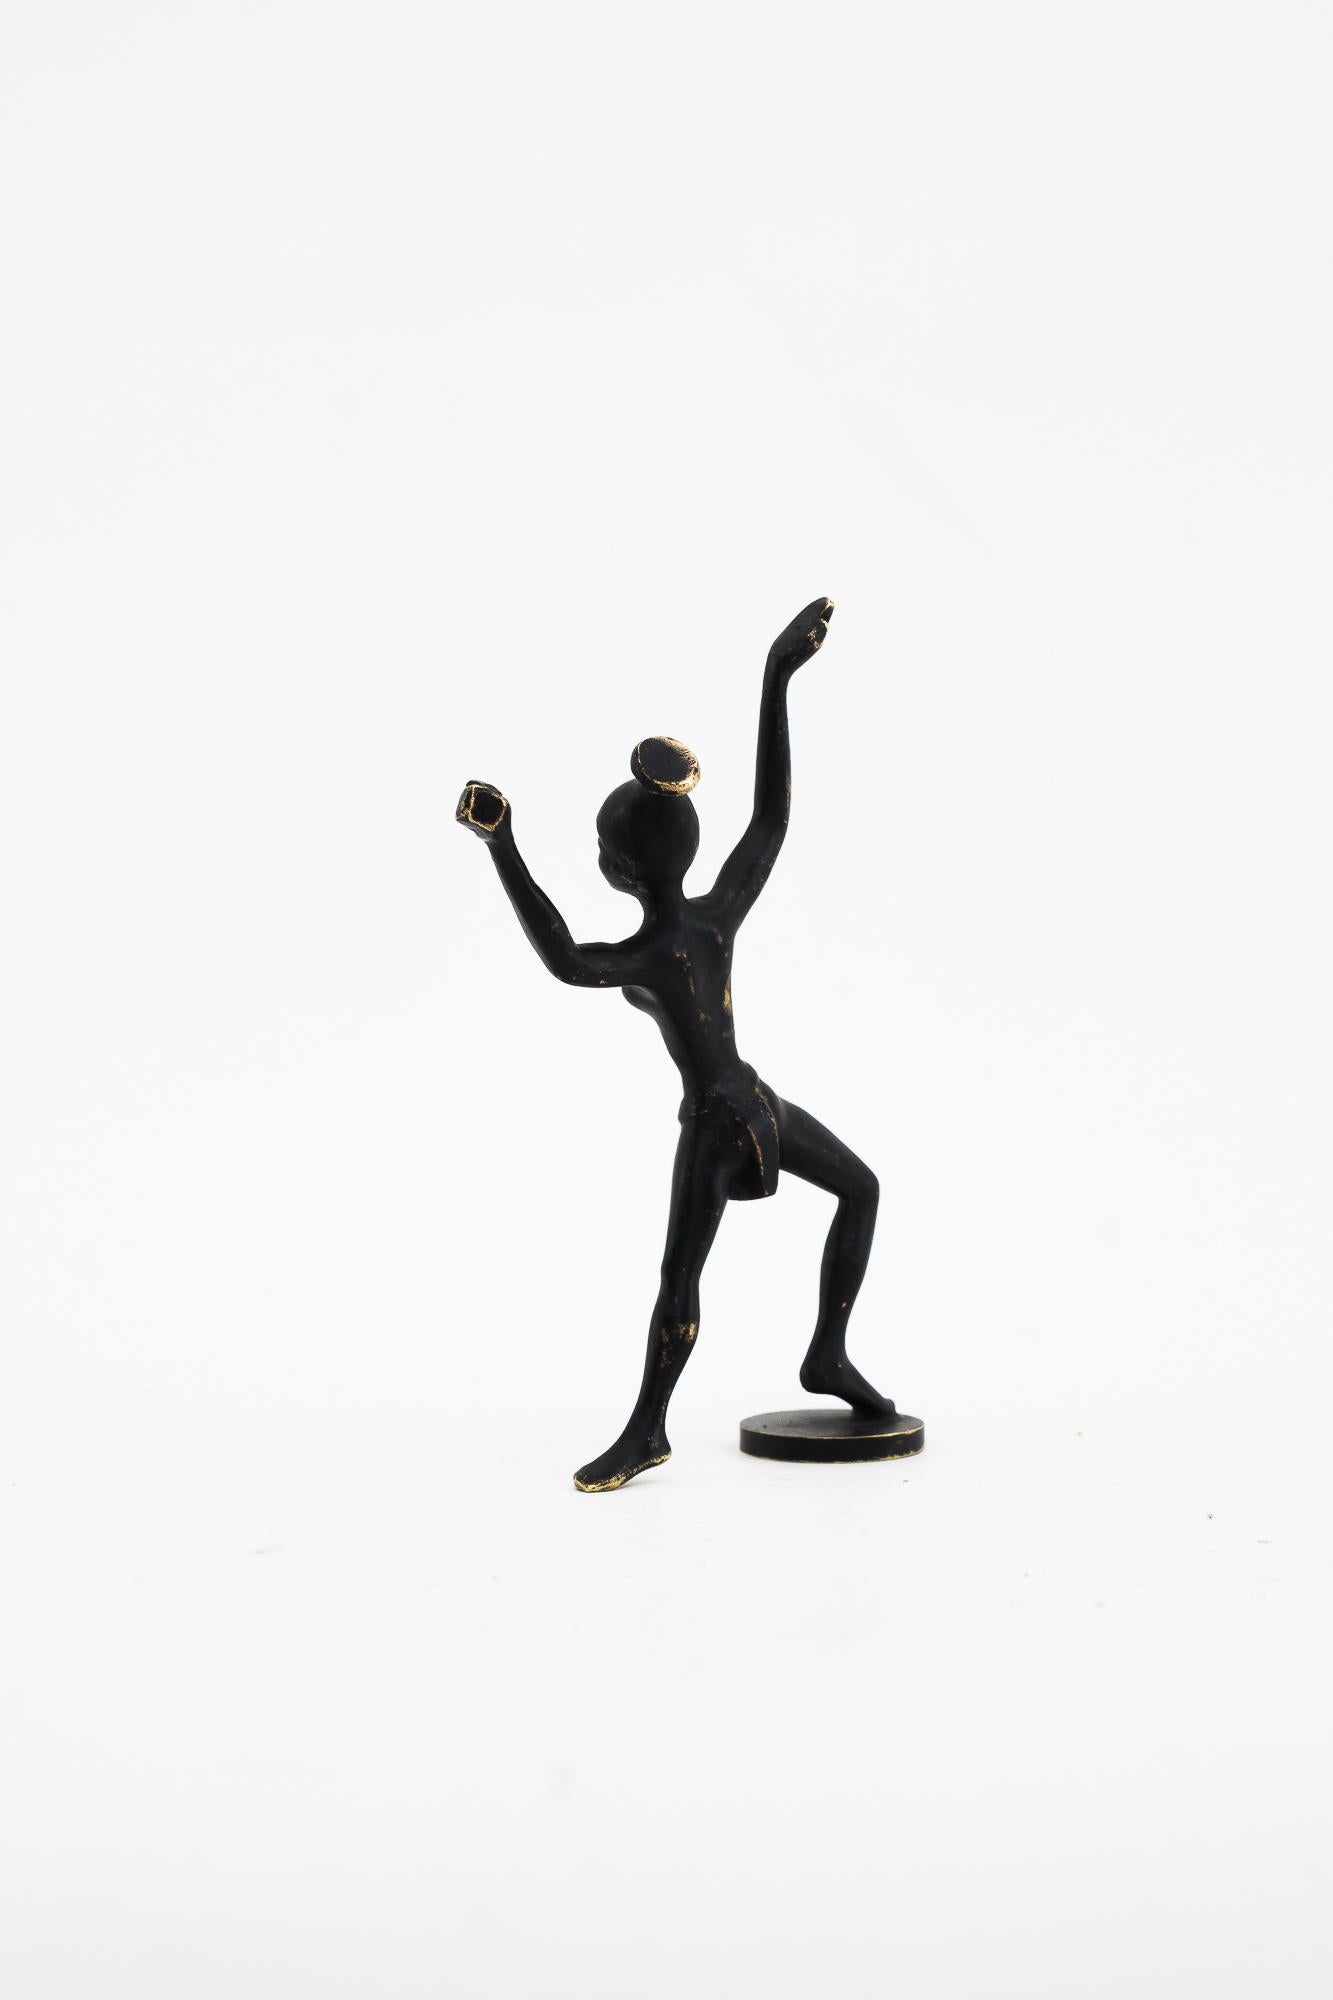 Small dancing African women figurine by Richard Rohac, Vienna, around 1950s.
Original condition.